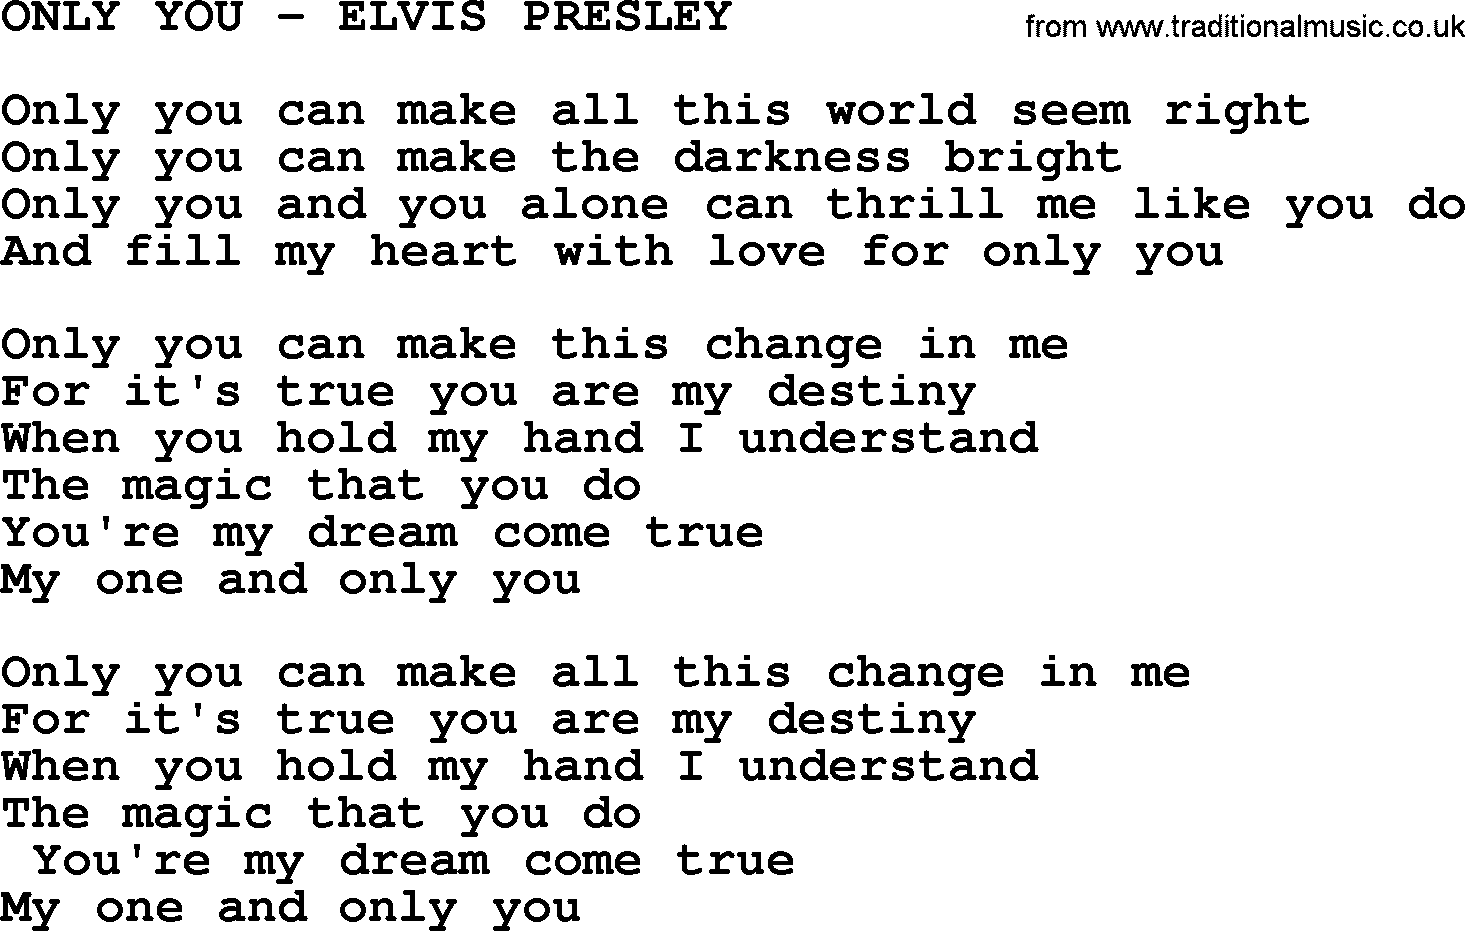 Elvis Presley song: Only You-Elvis Presley-.txt lyrics and chords